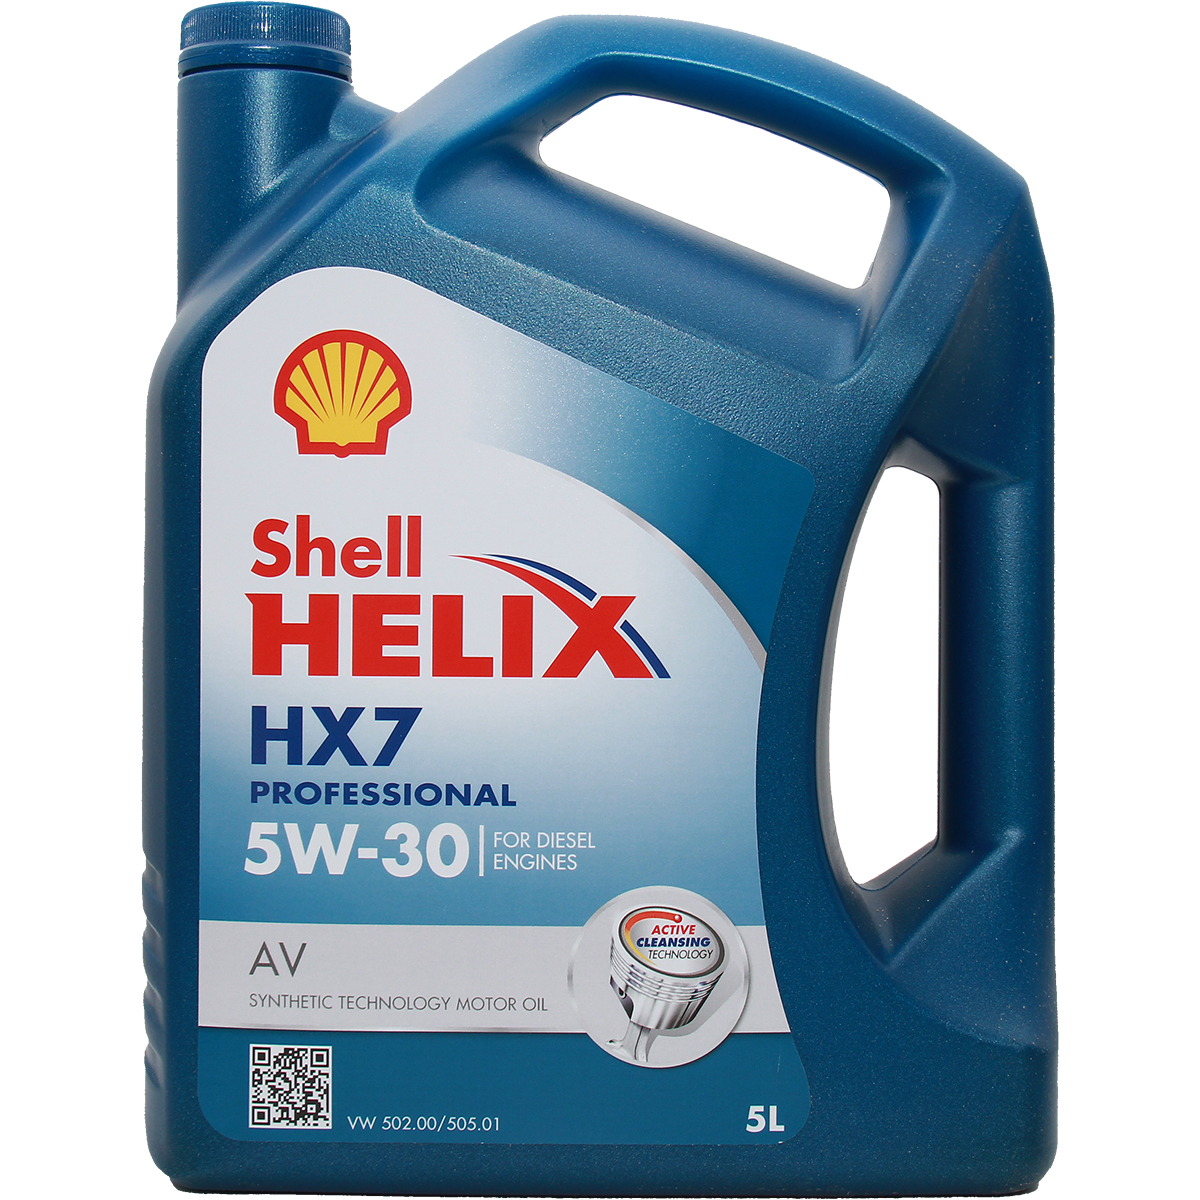 Shell Helix HX7 Professional AV 5W-30 5 Liter